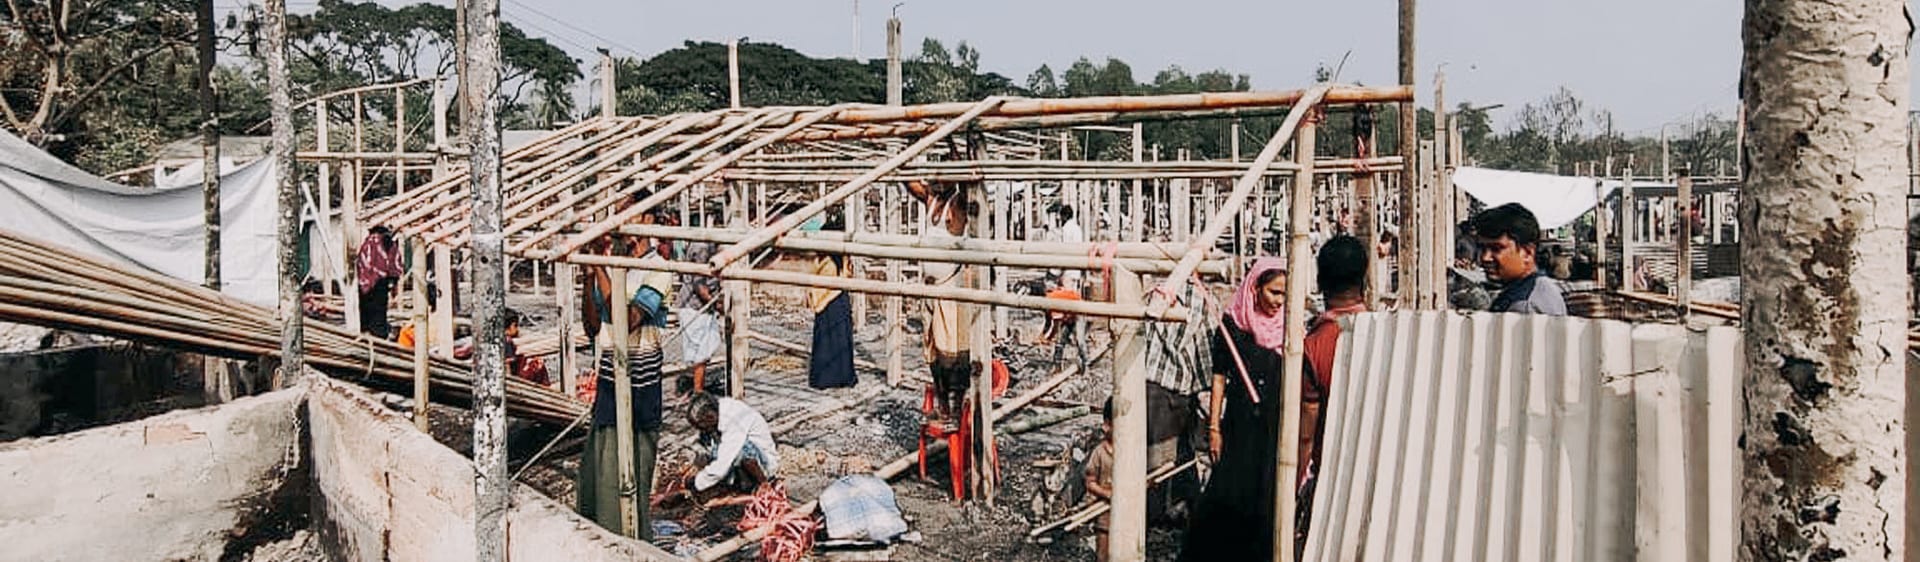 rohingya refugee camps rebuilding houses